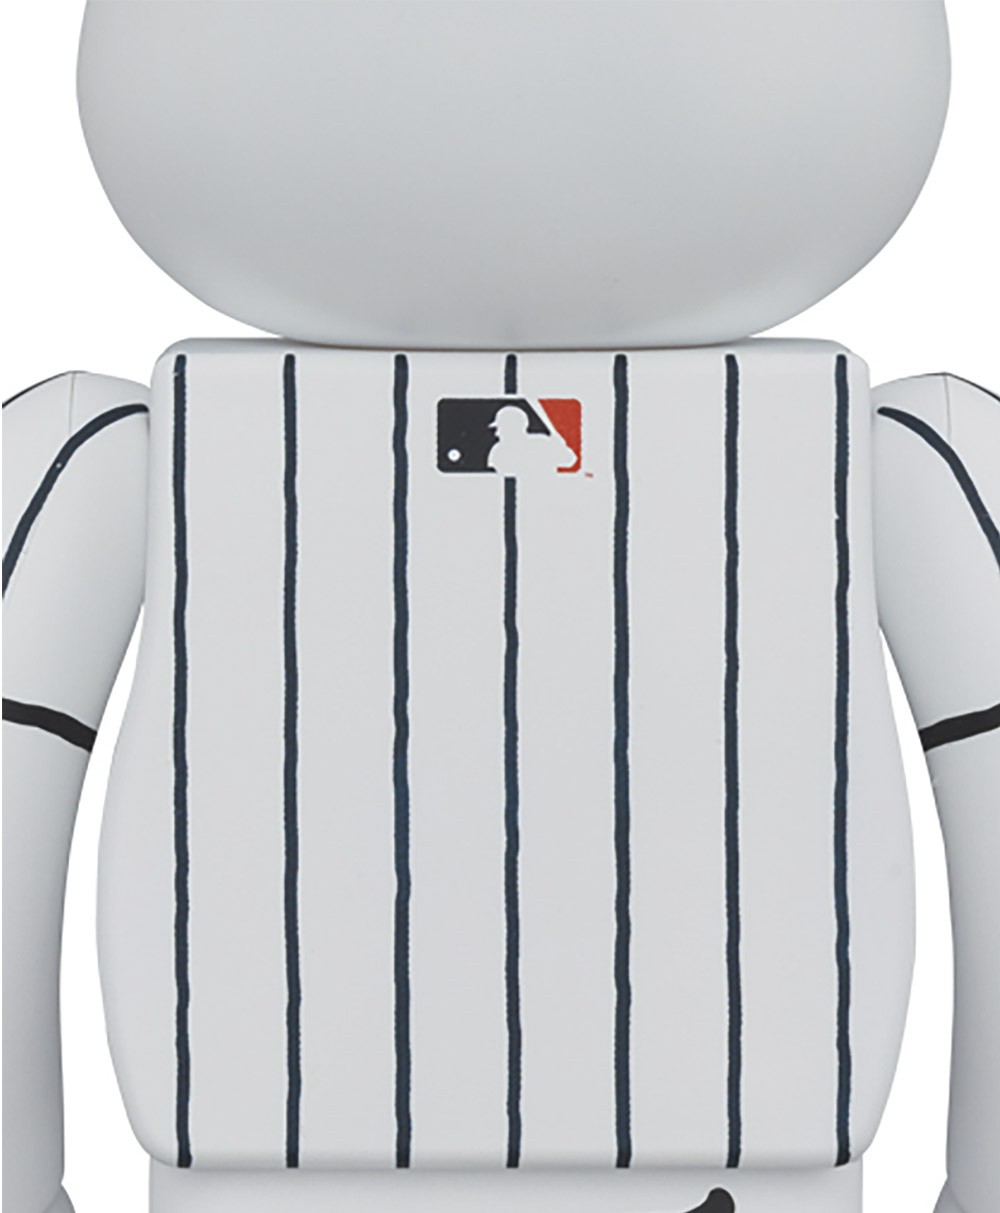 Der Be@rbrick Snoopy hat das Logo der Major League Baseball auf dem Rücken